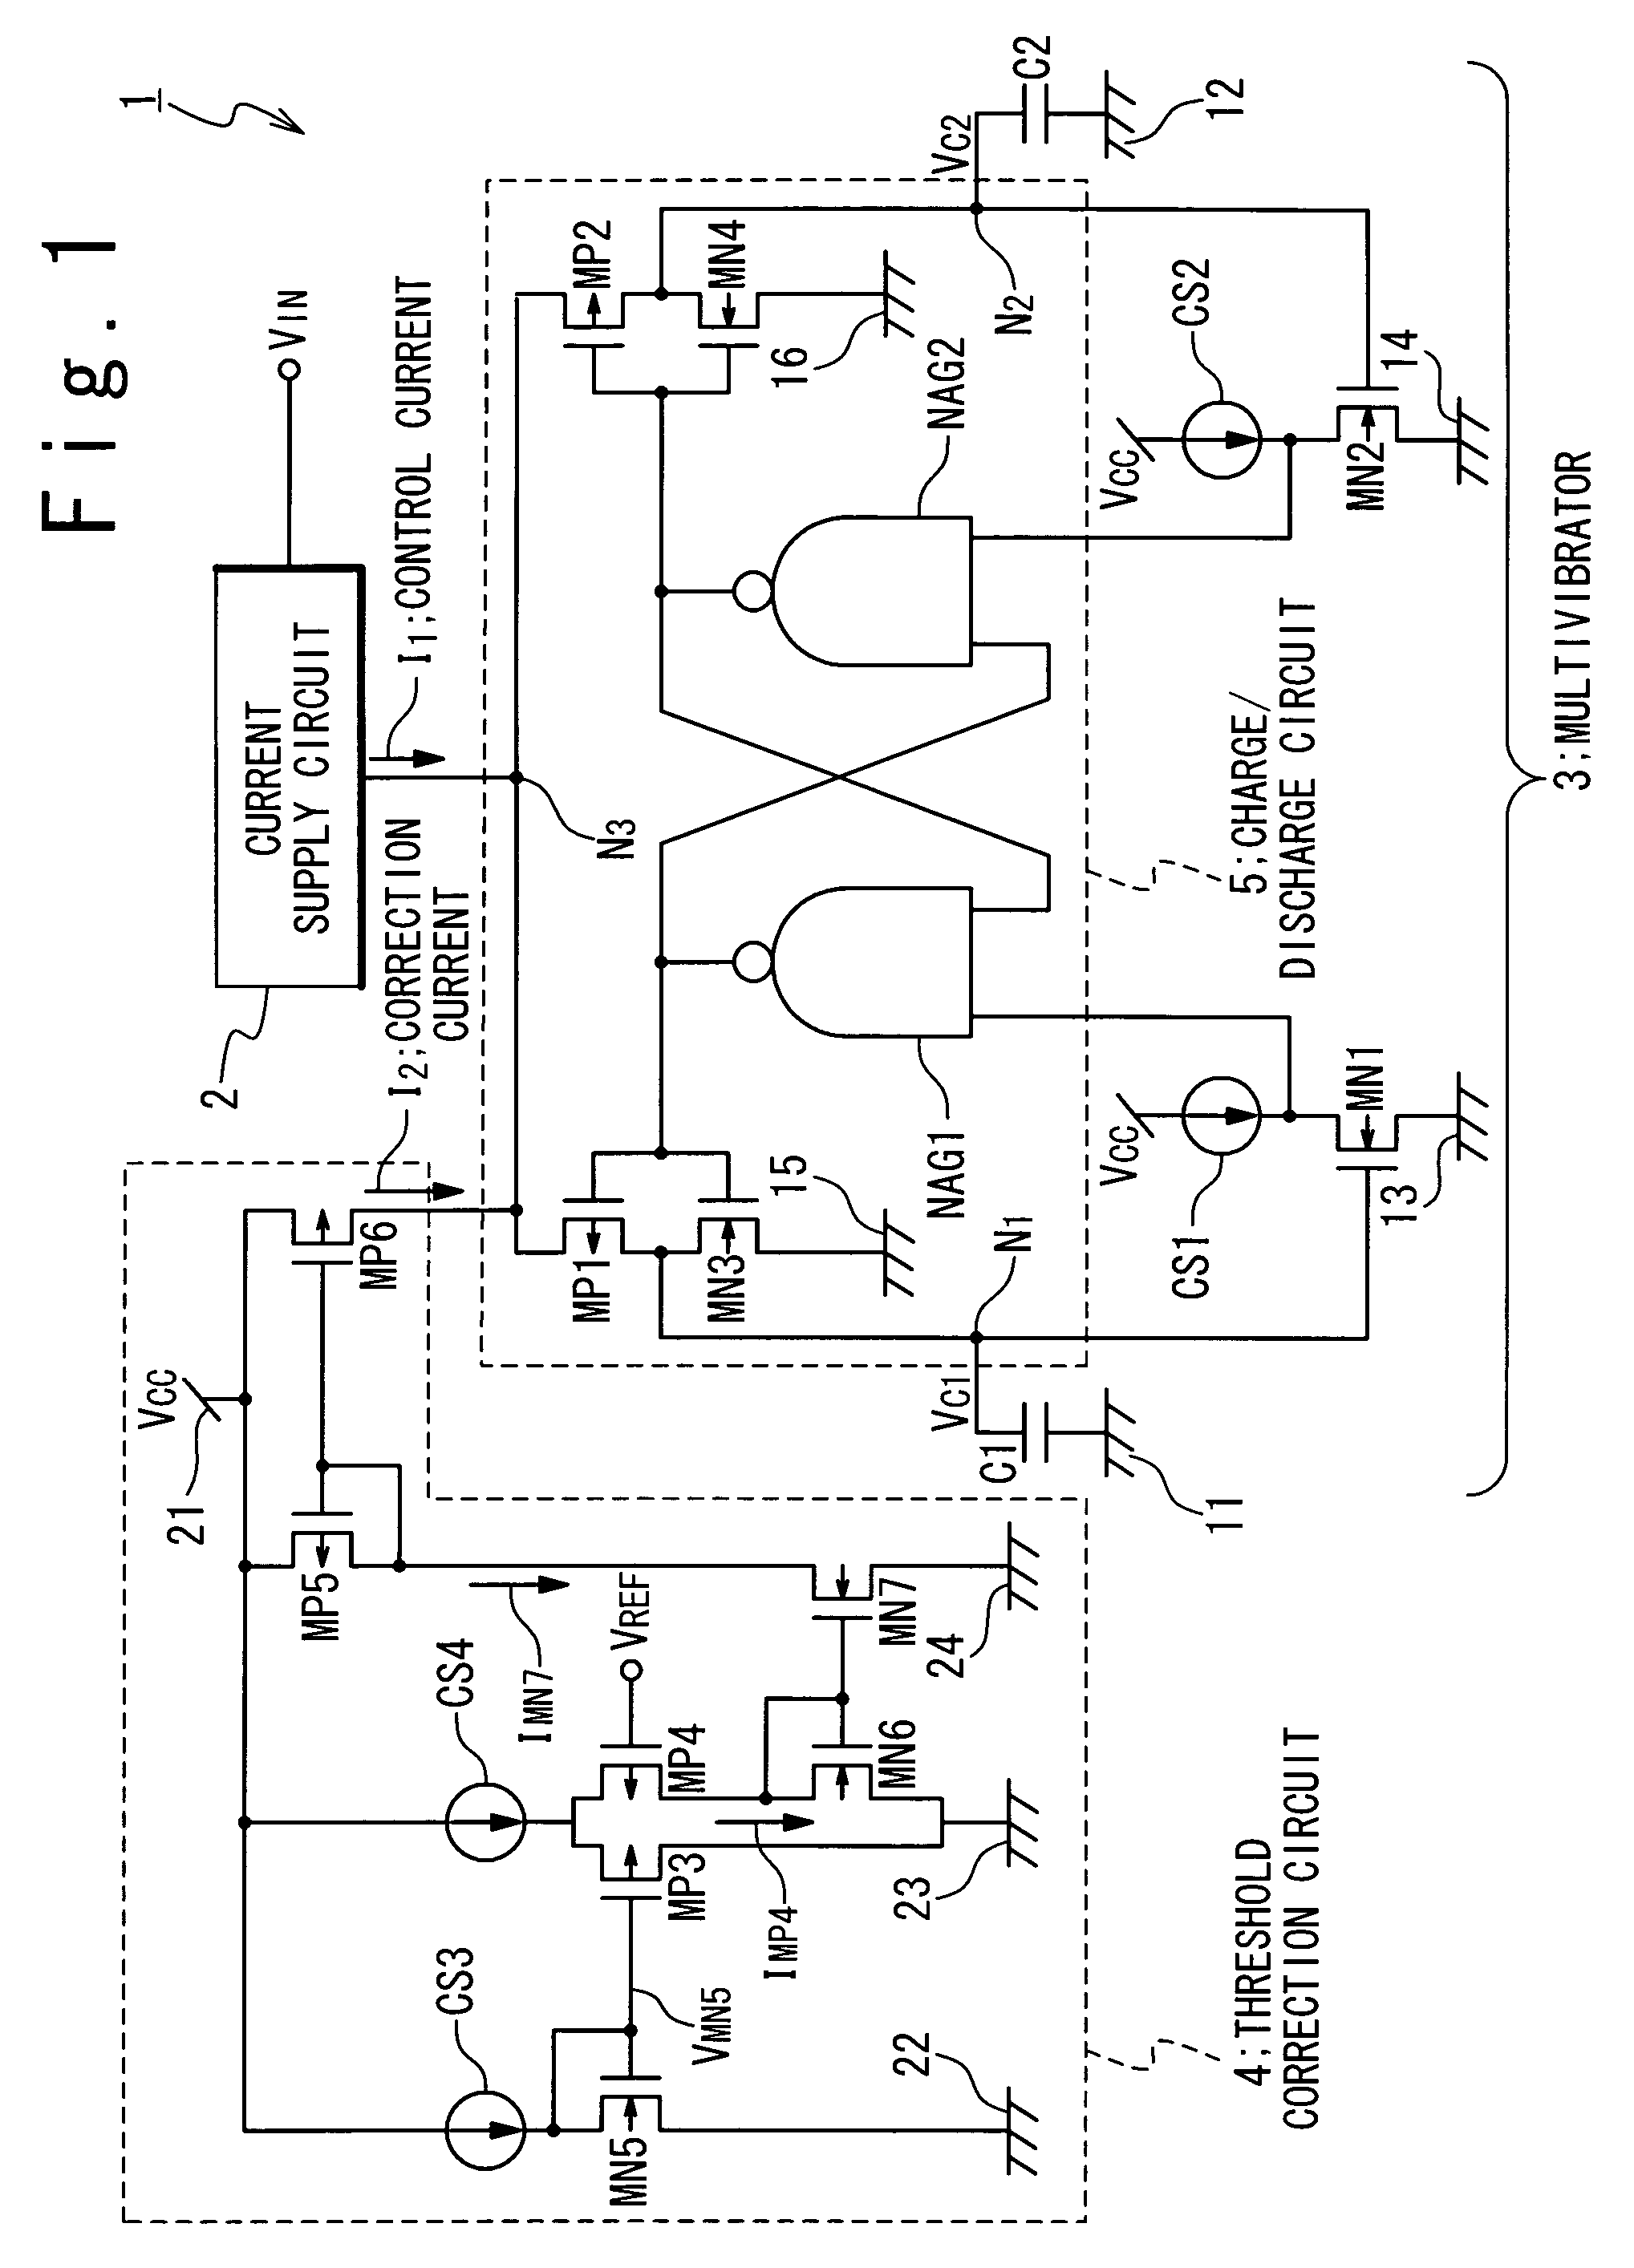 Oscillation circuit and operation method thereof